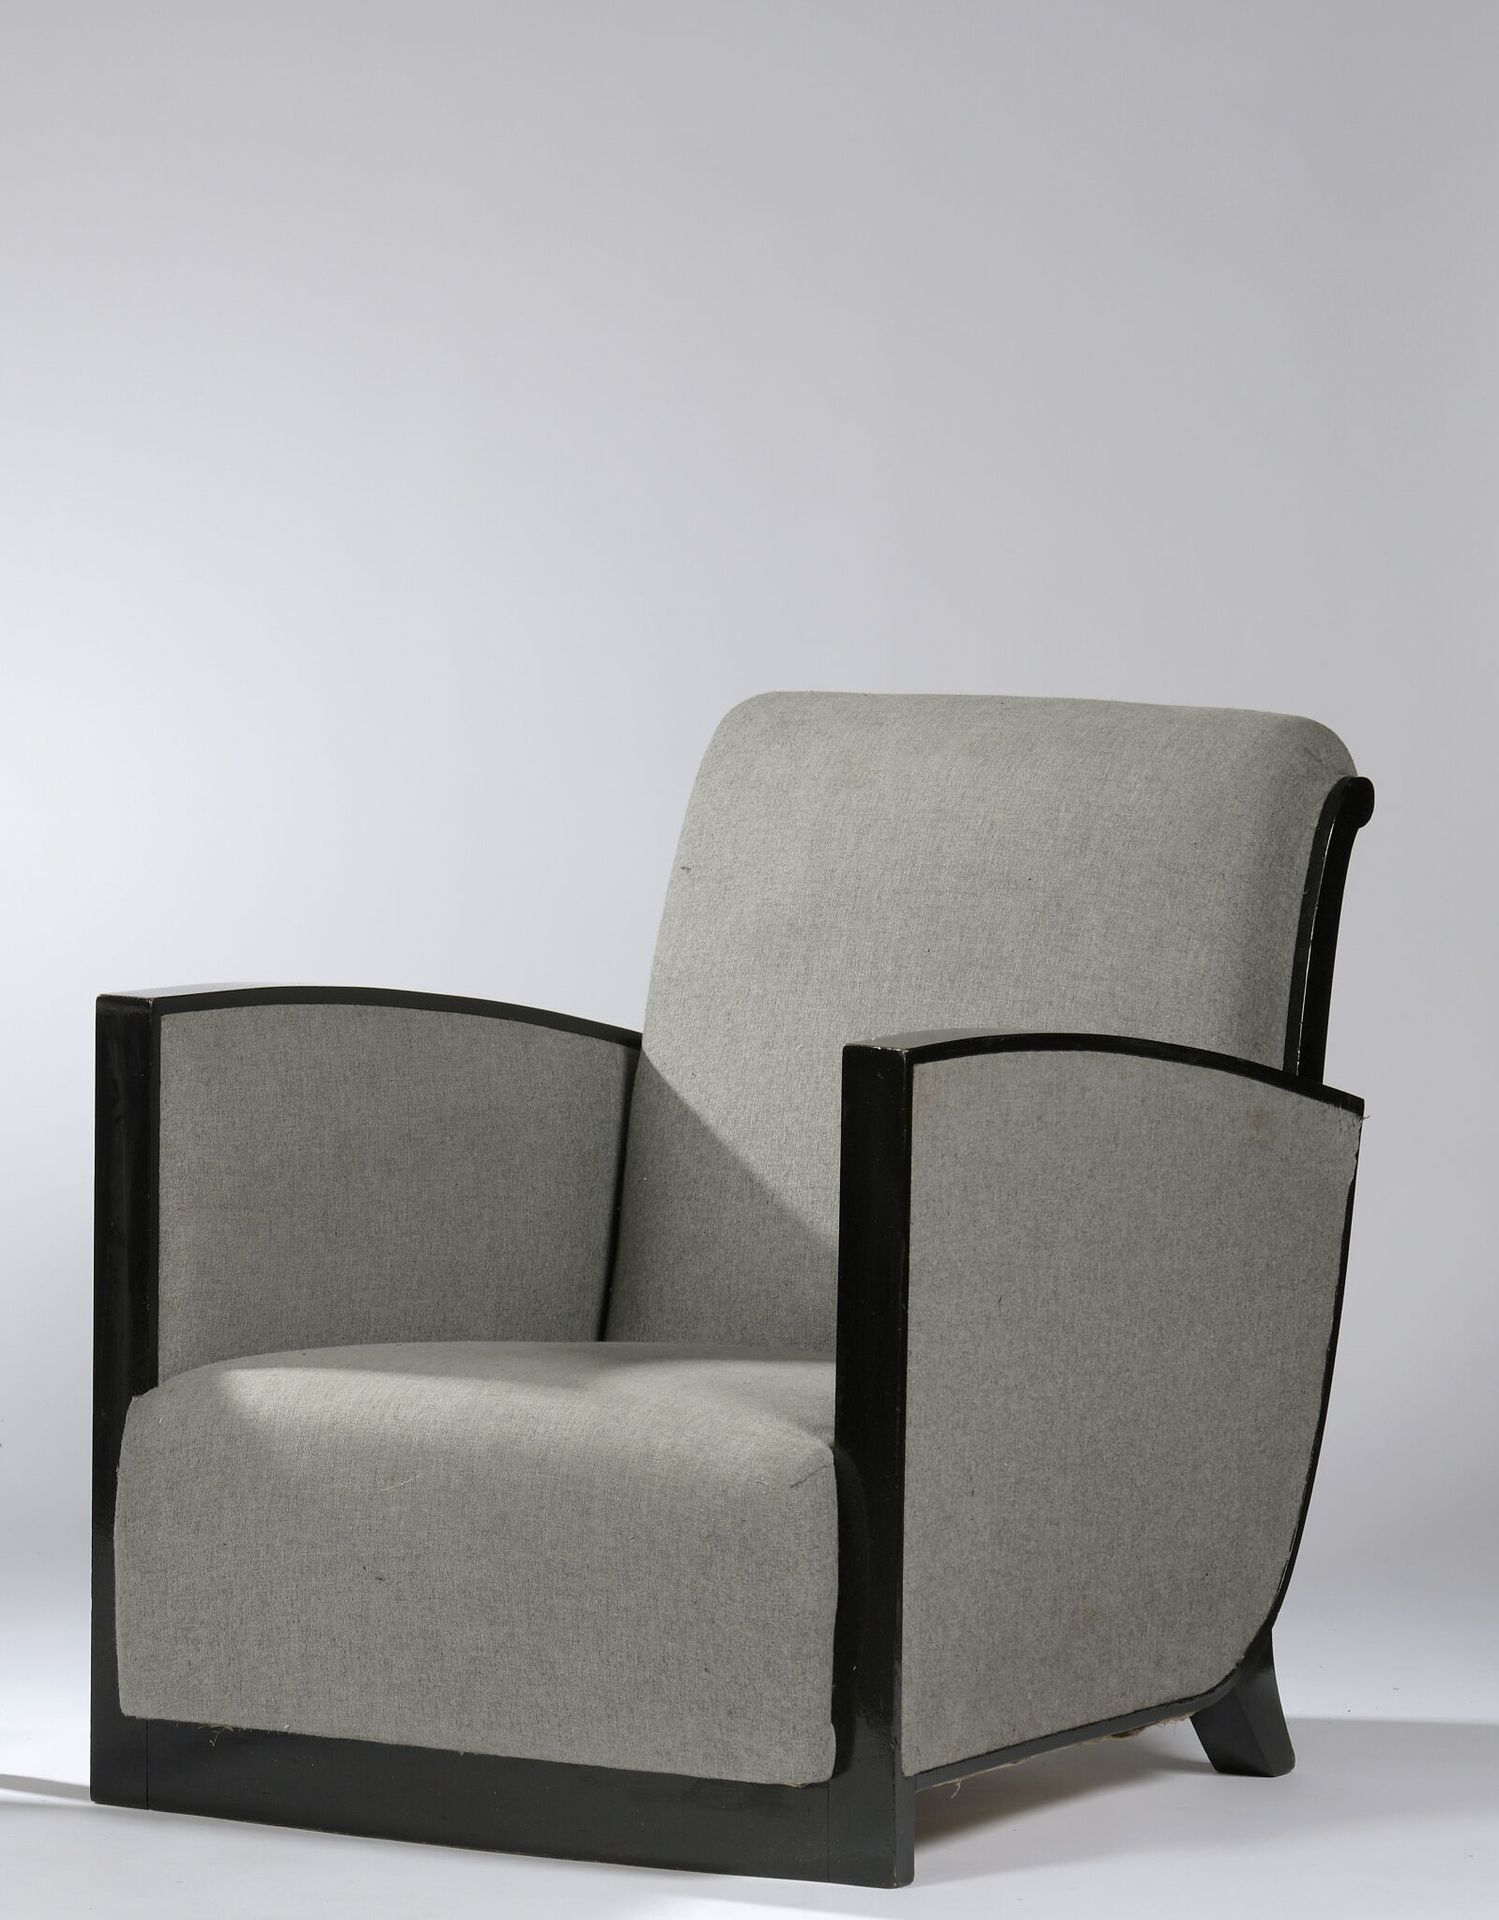 Null 多米尼克-豪斯。

1940年代的作品。

低矮的扶手椅，宽大的黑色漆面扶手用织物装饰，支撑着一个靠背和一个卷起的座椅。前面的底座是柱状的，后面的底座&hellip;